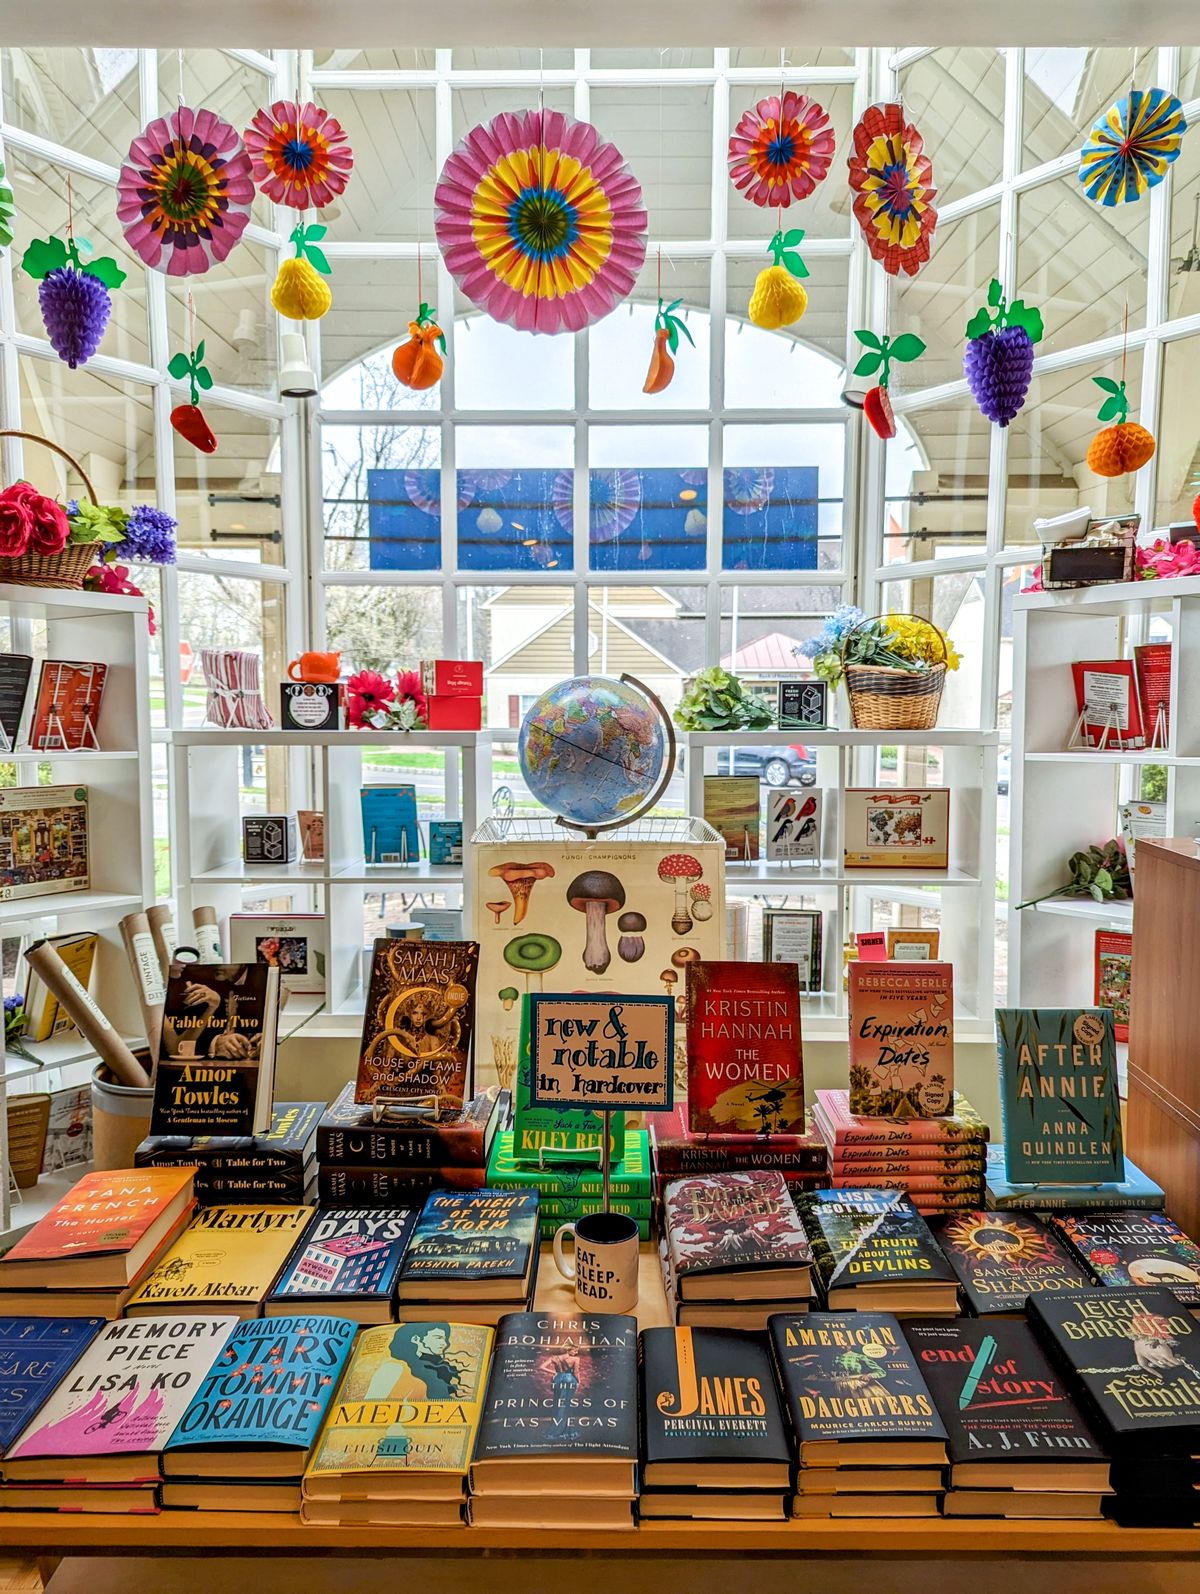 The main display window of Lahaska Bookshop with books and flowers.